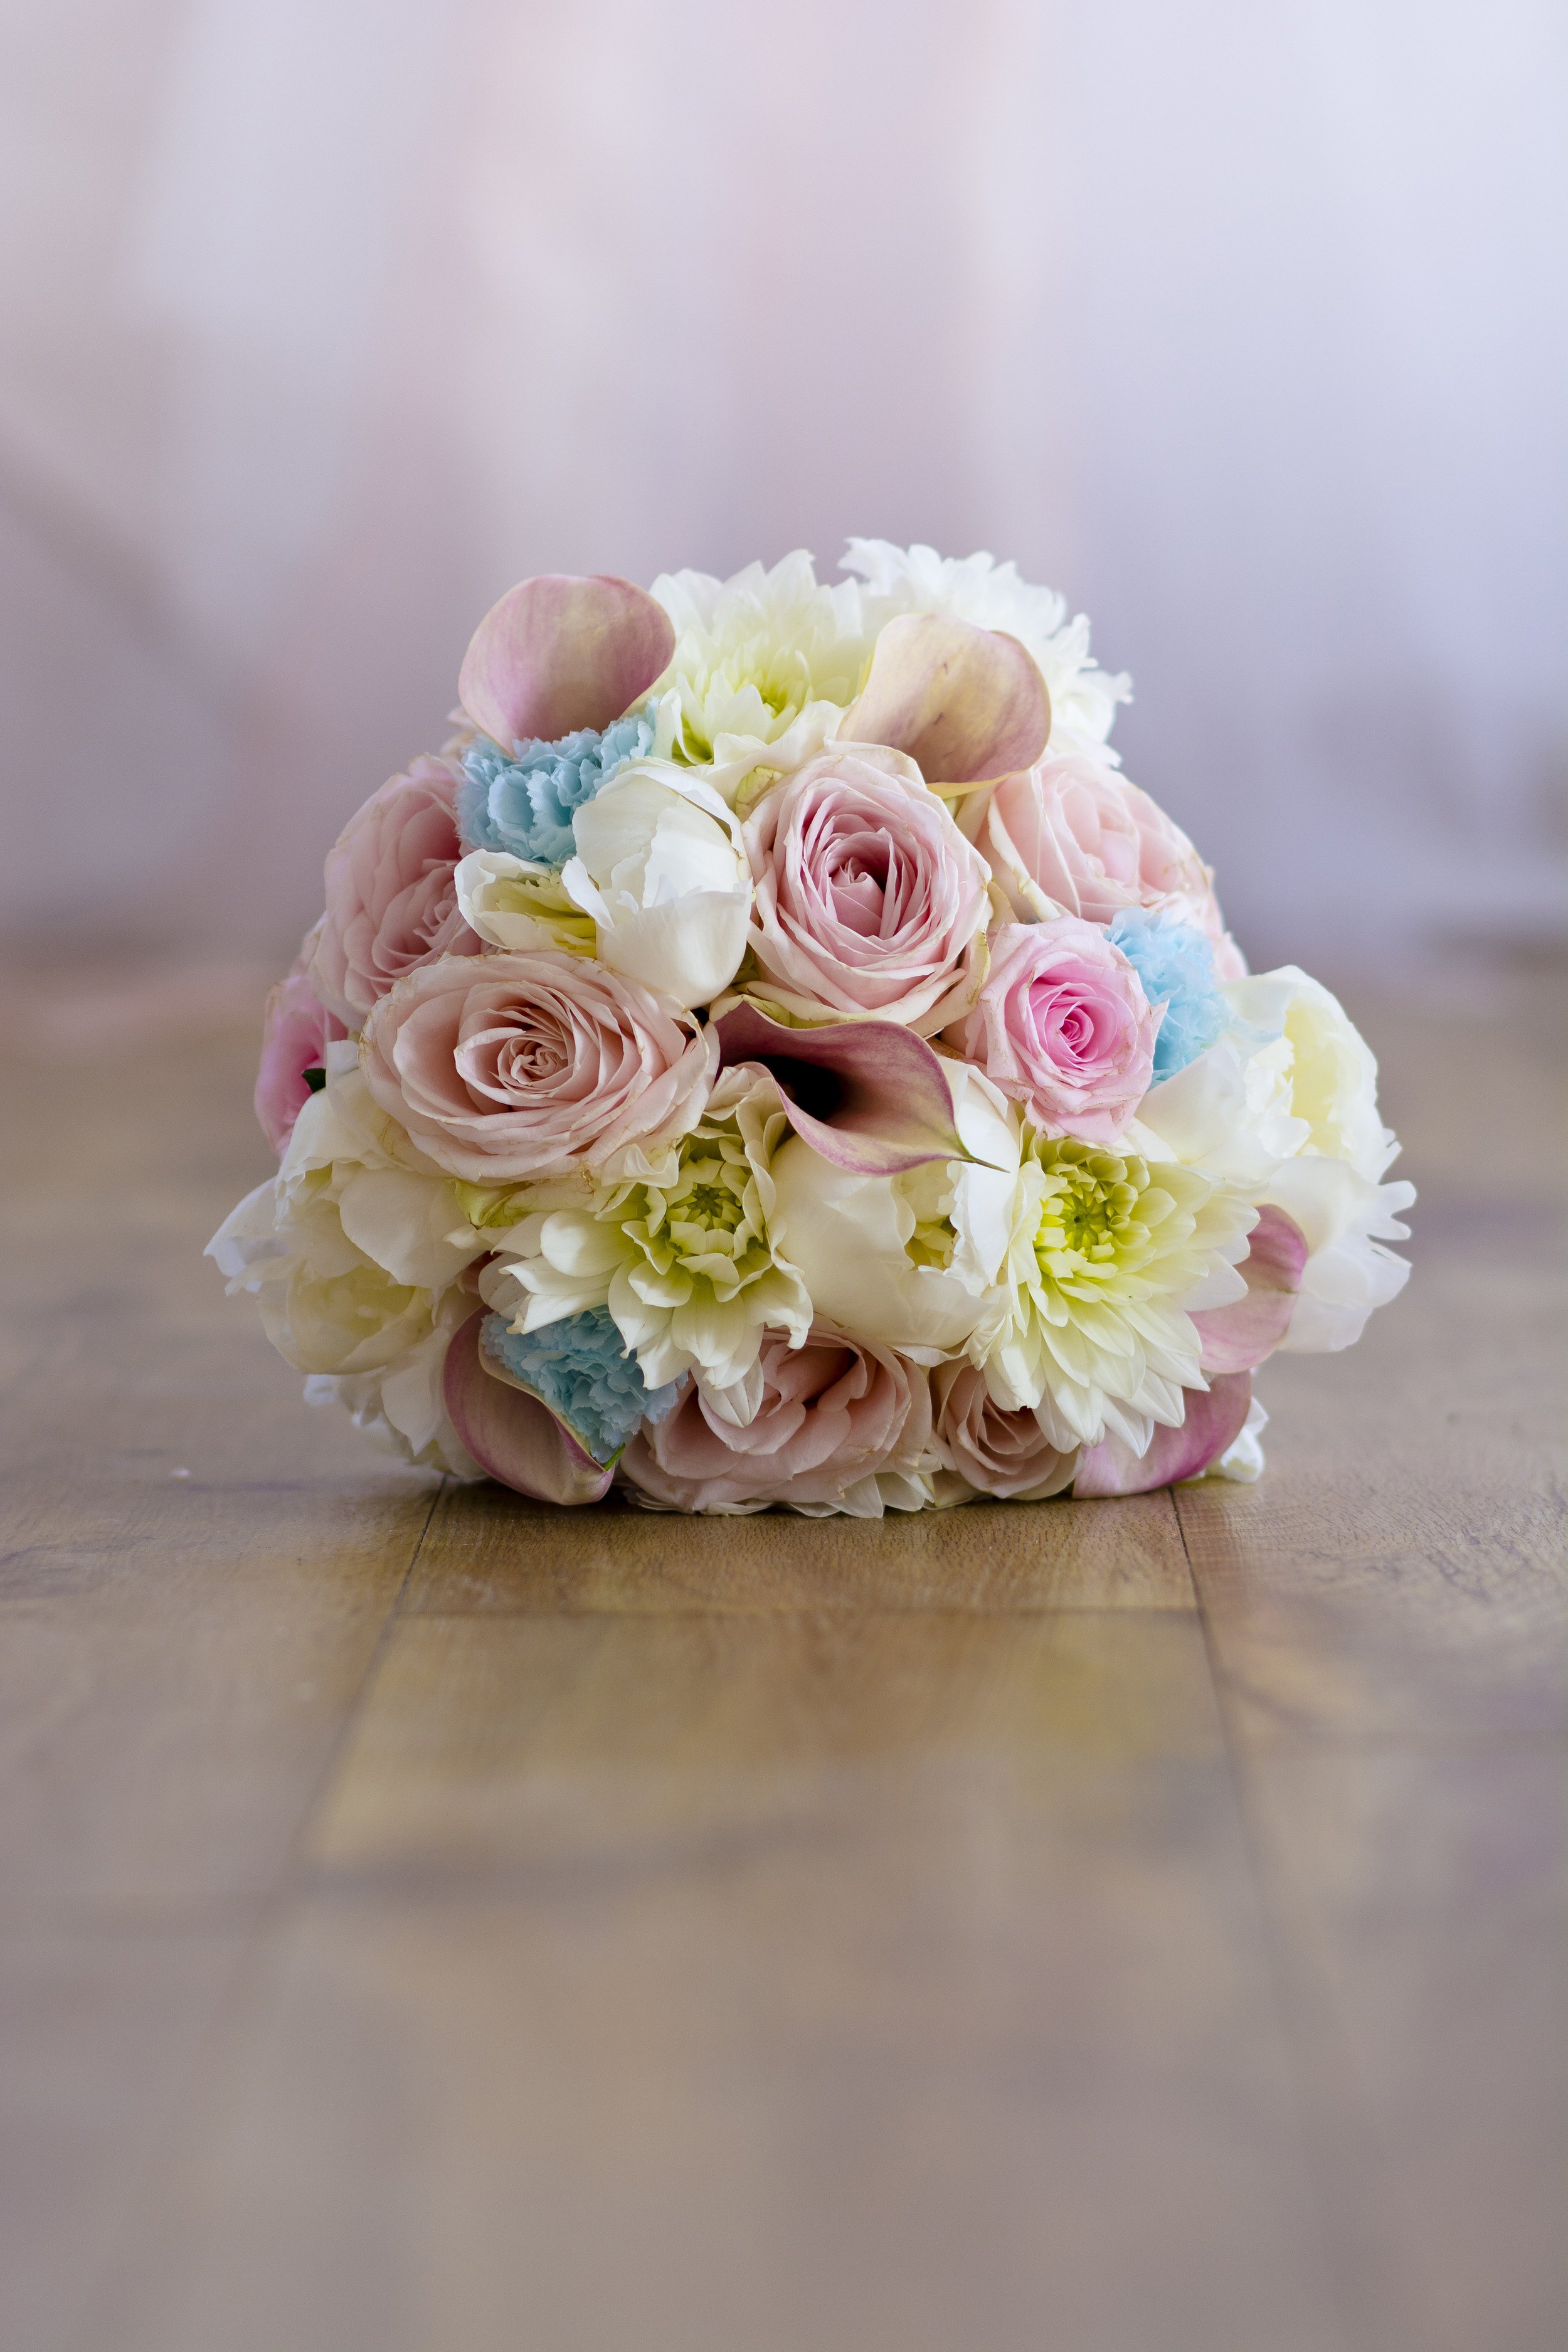 Lincolnshire-wedding-bouquet-photographs.jpg